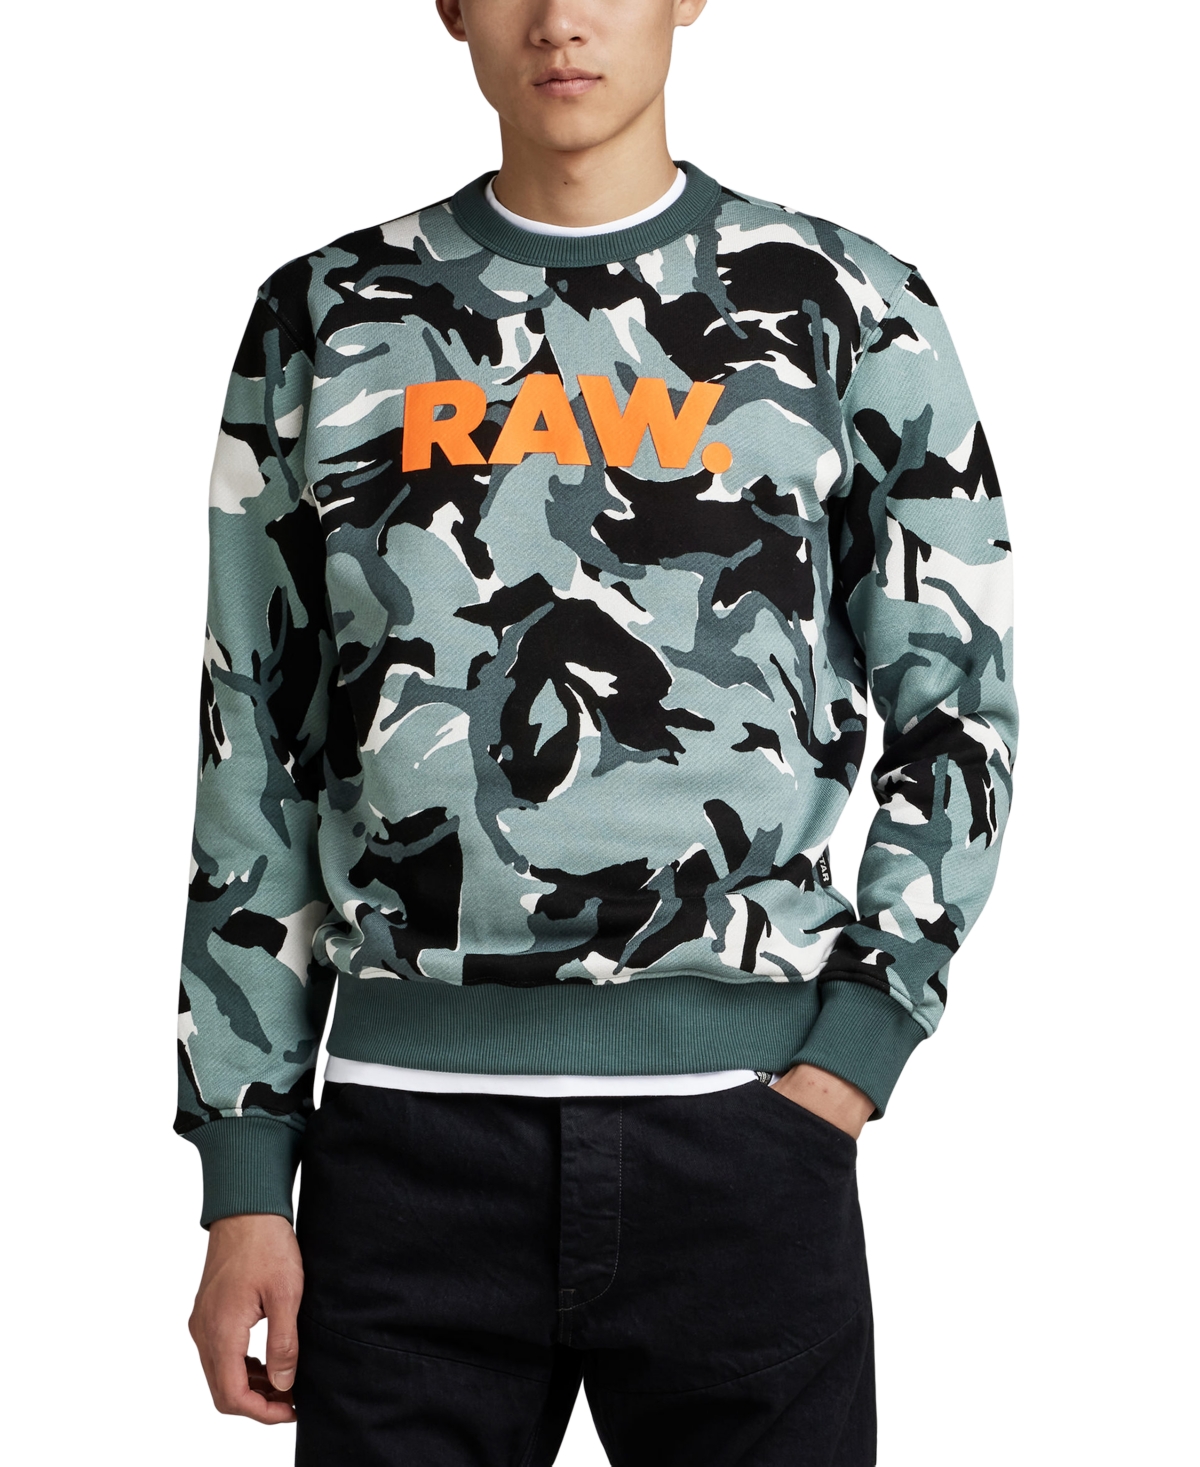 G-star Raw Men's Classic Fit Camo Print Crewneck Logo Sweatshirt In Multi